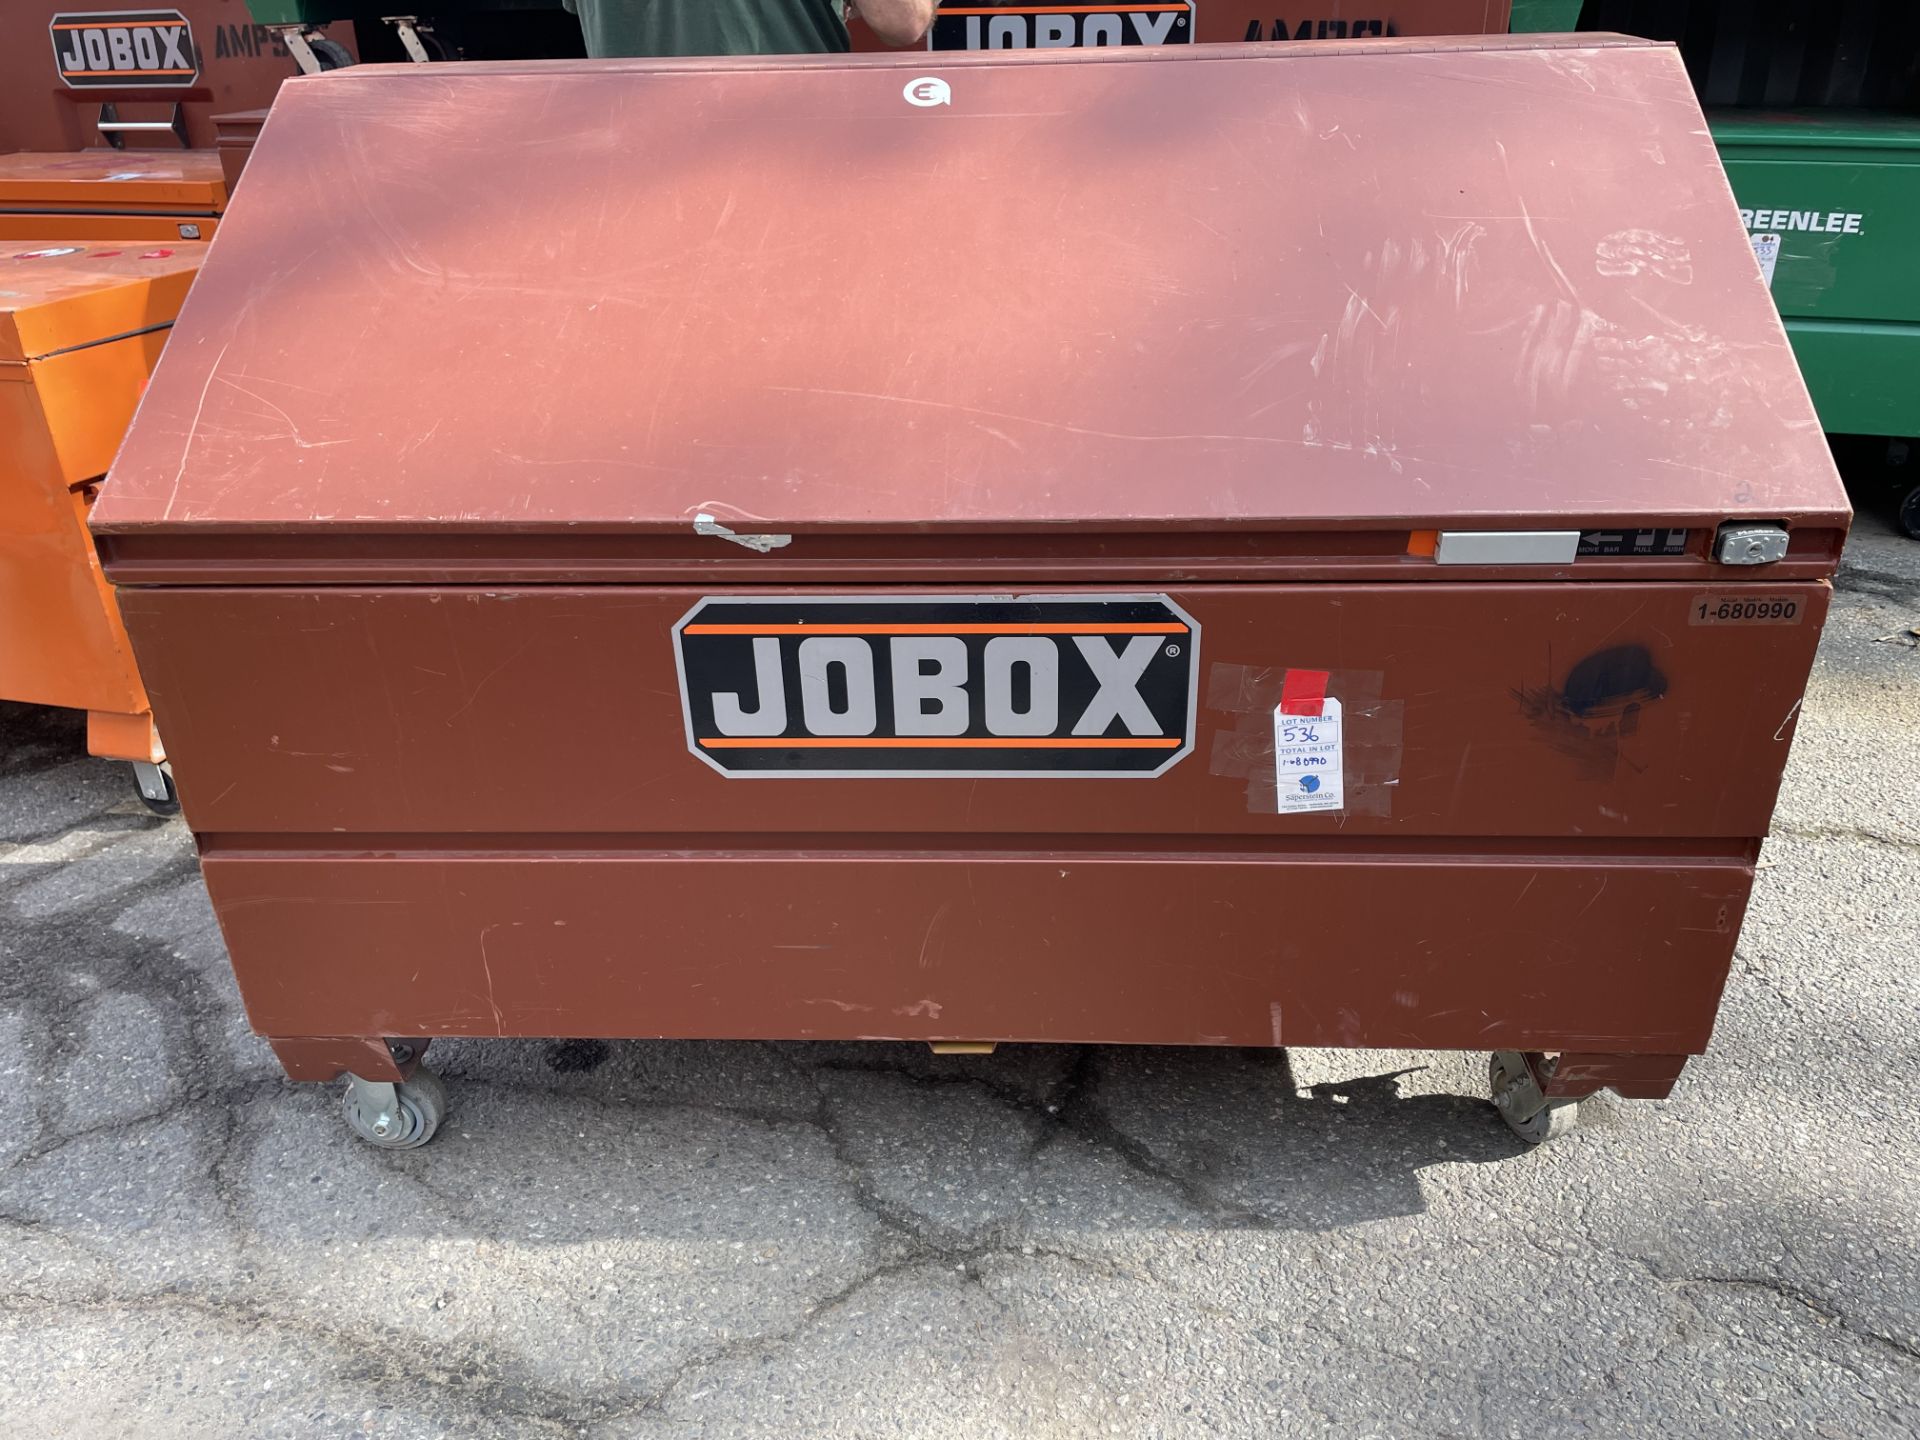 Jobox Job Box #1680990 5' Length 2.5' Depth 4' Hight